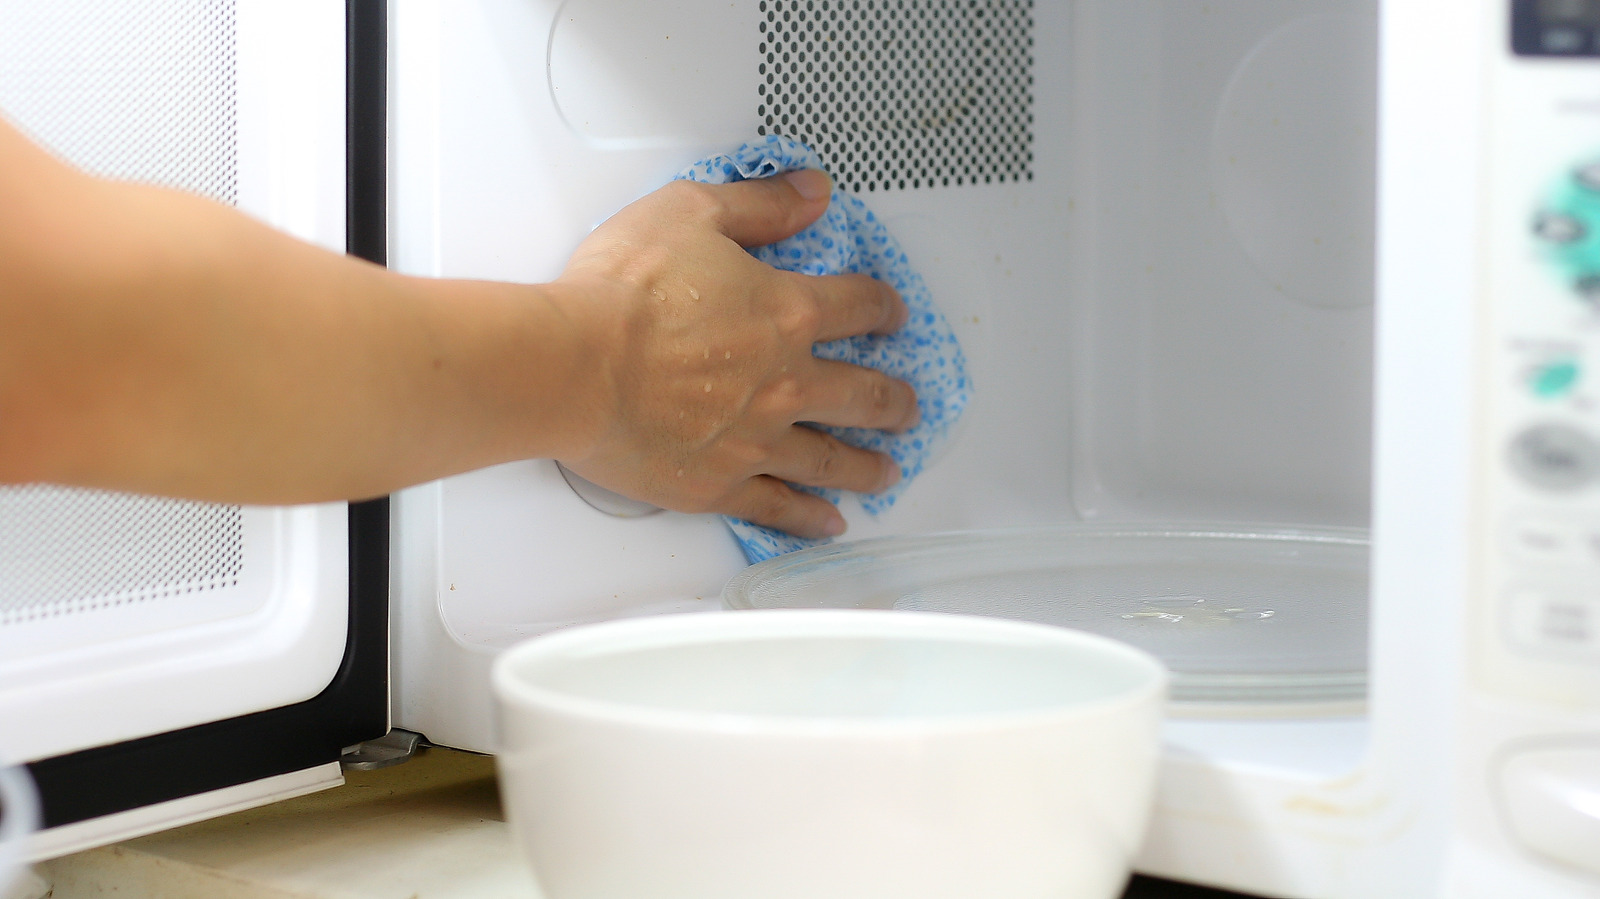 microwave maintenance tips